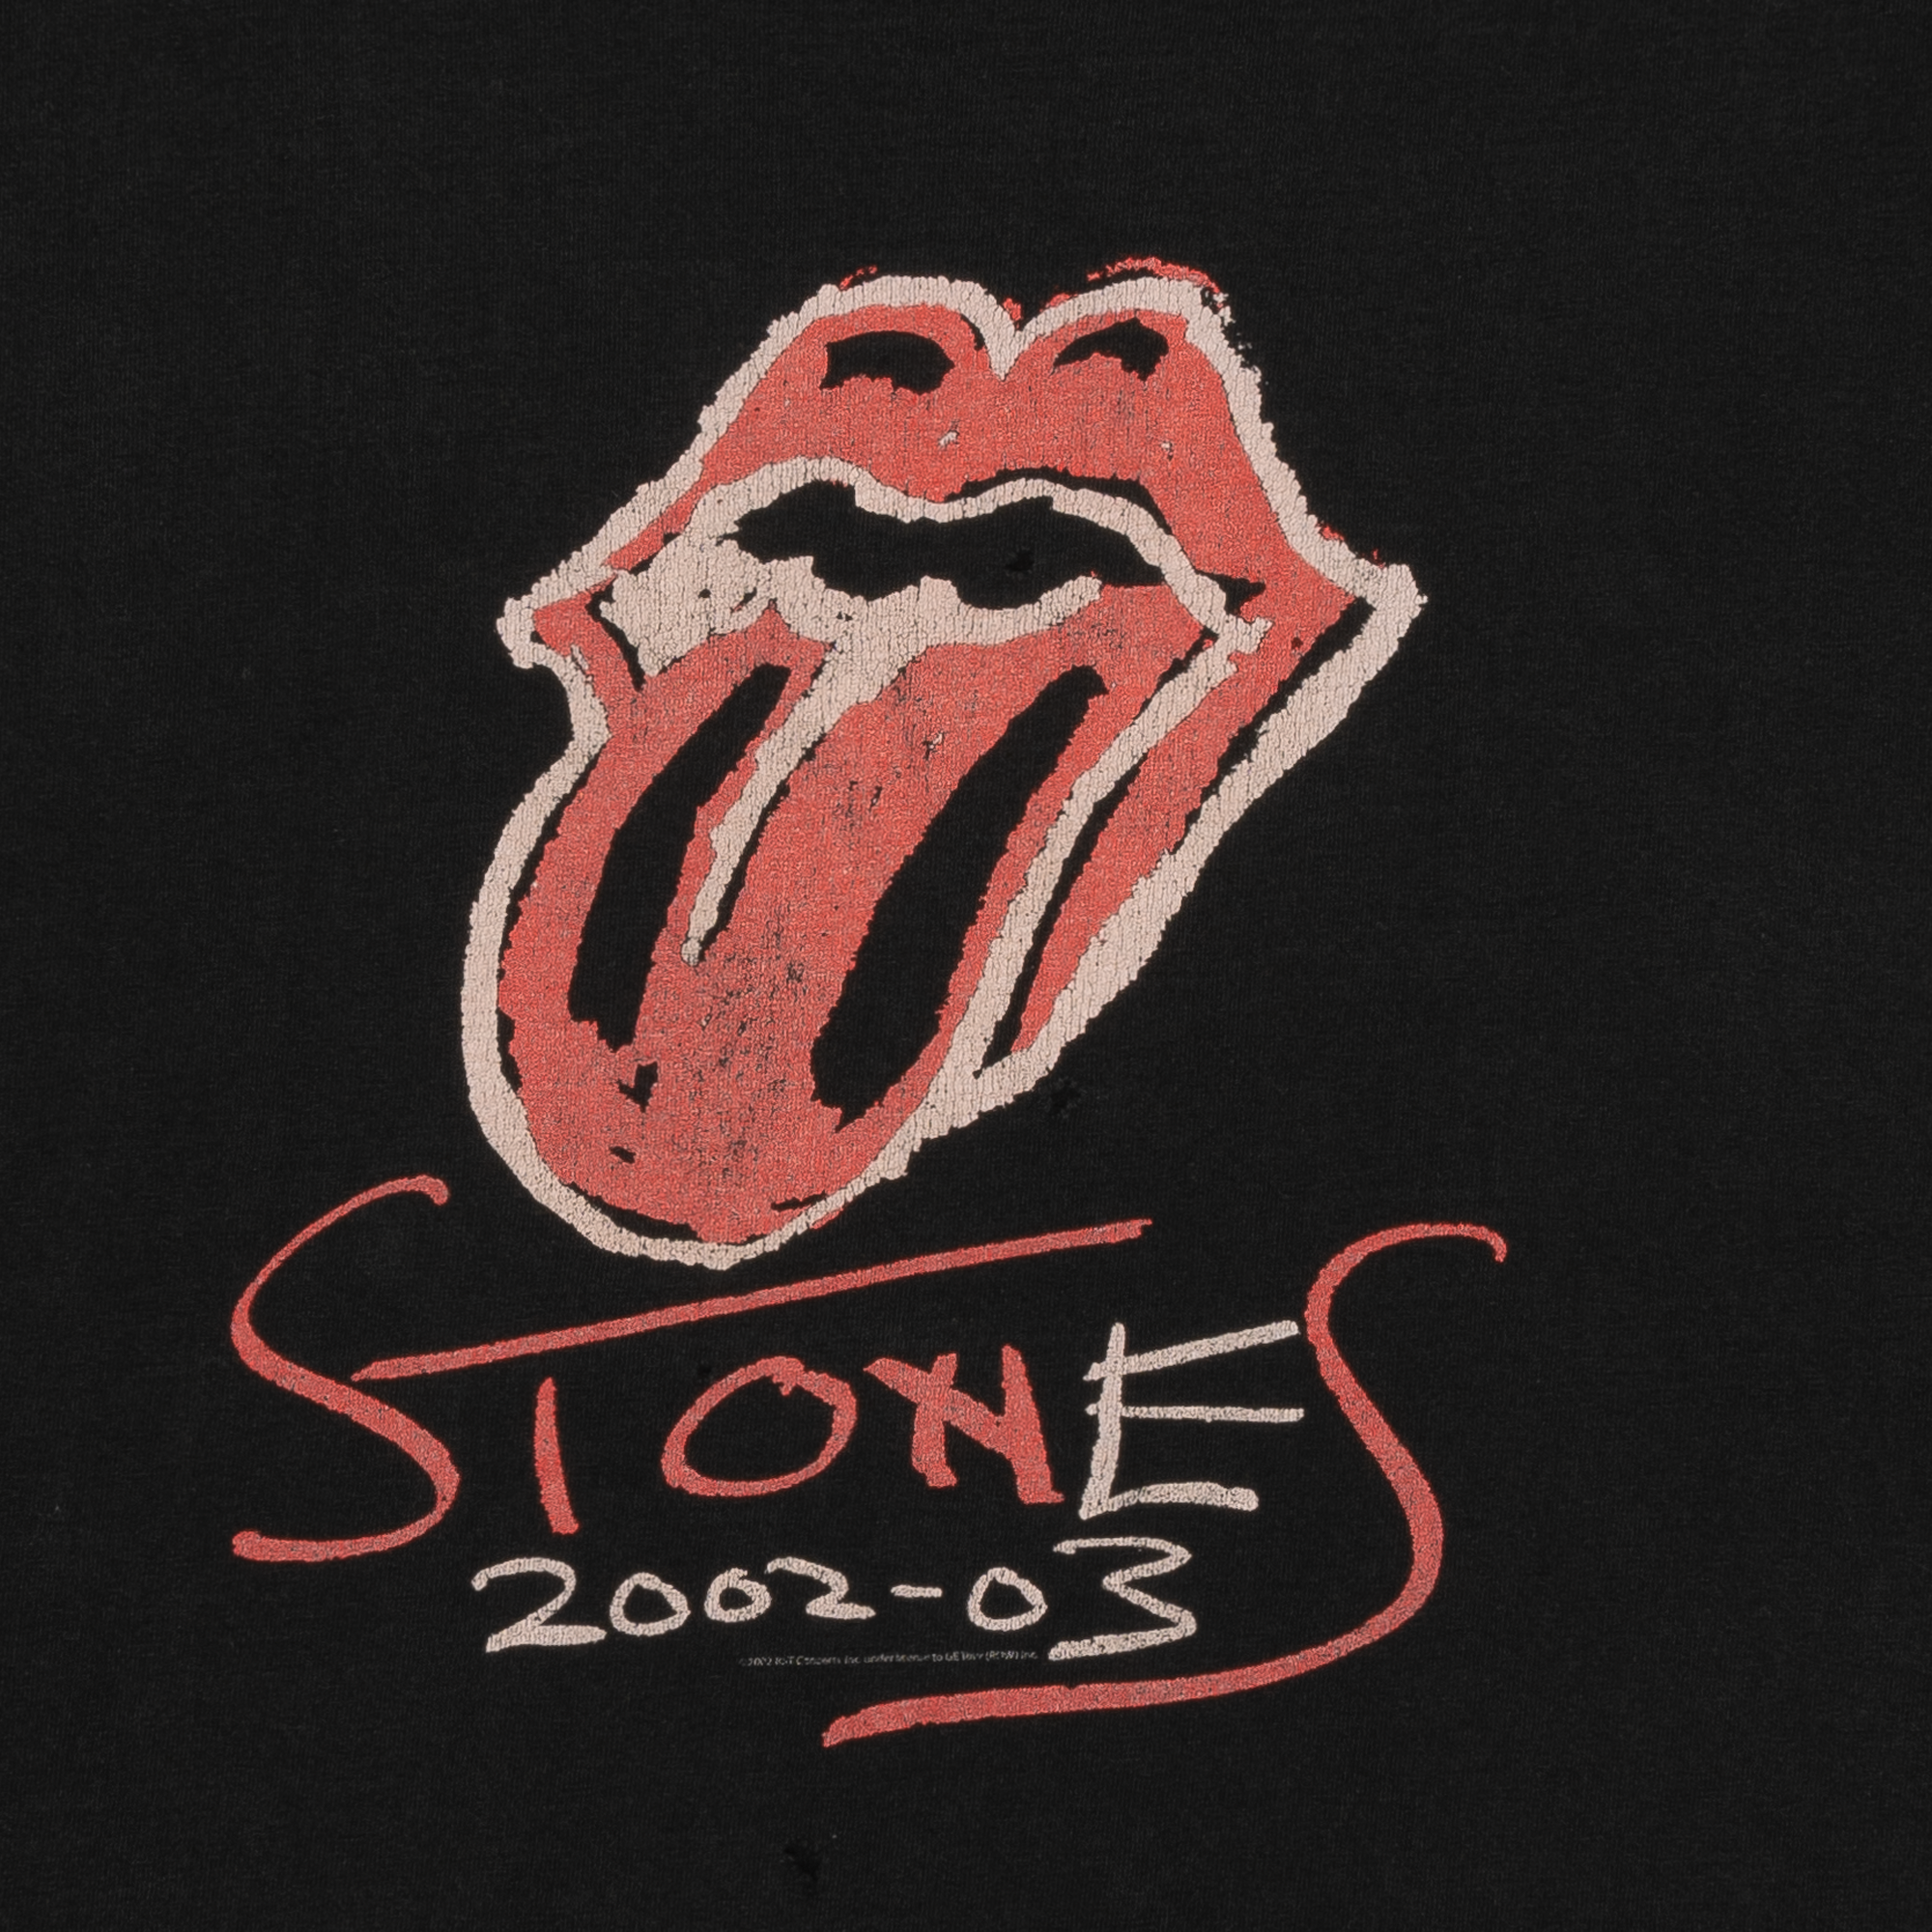 Rolling Stones Satisfaction World Tour 2002 Ringer Tee Black-PLUS